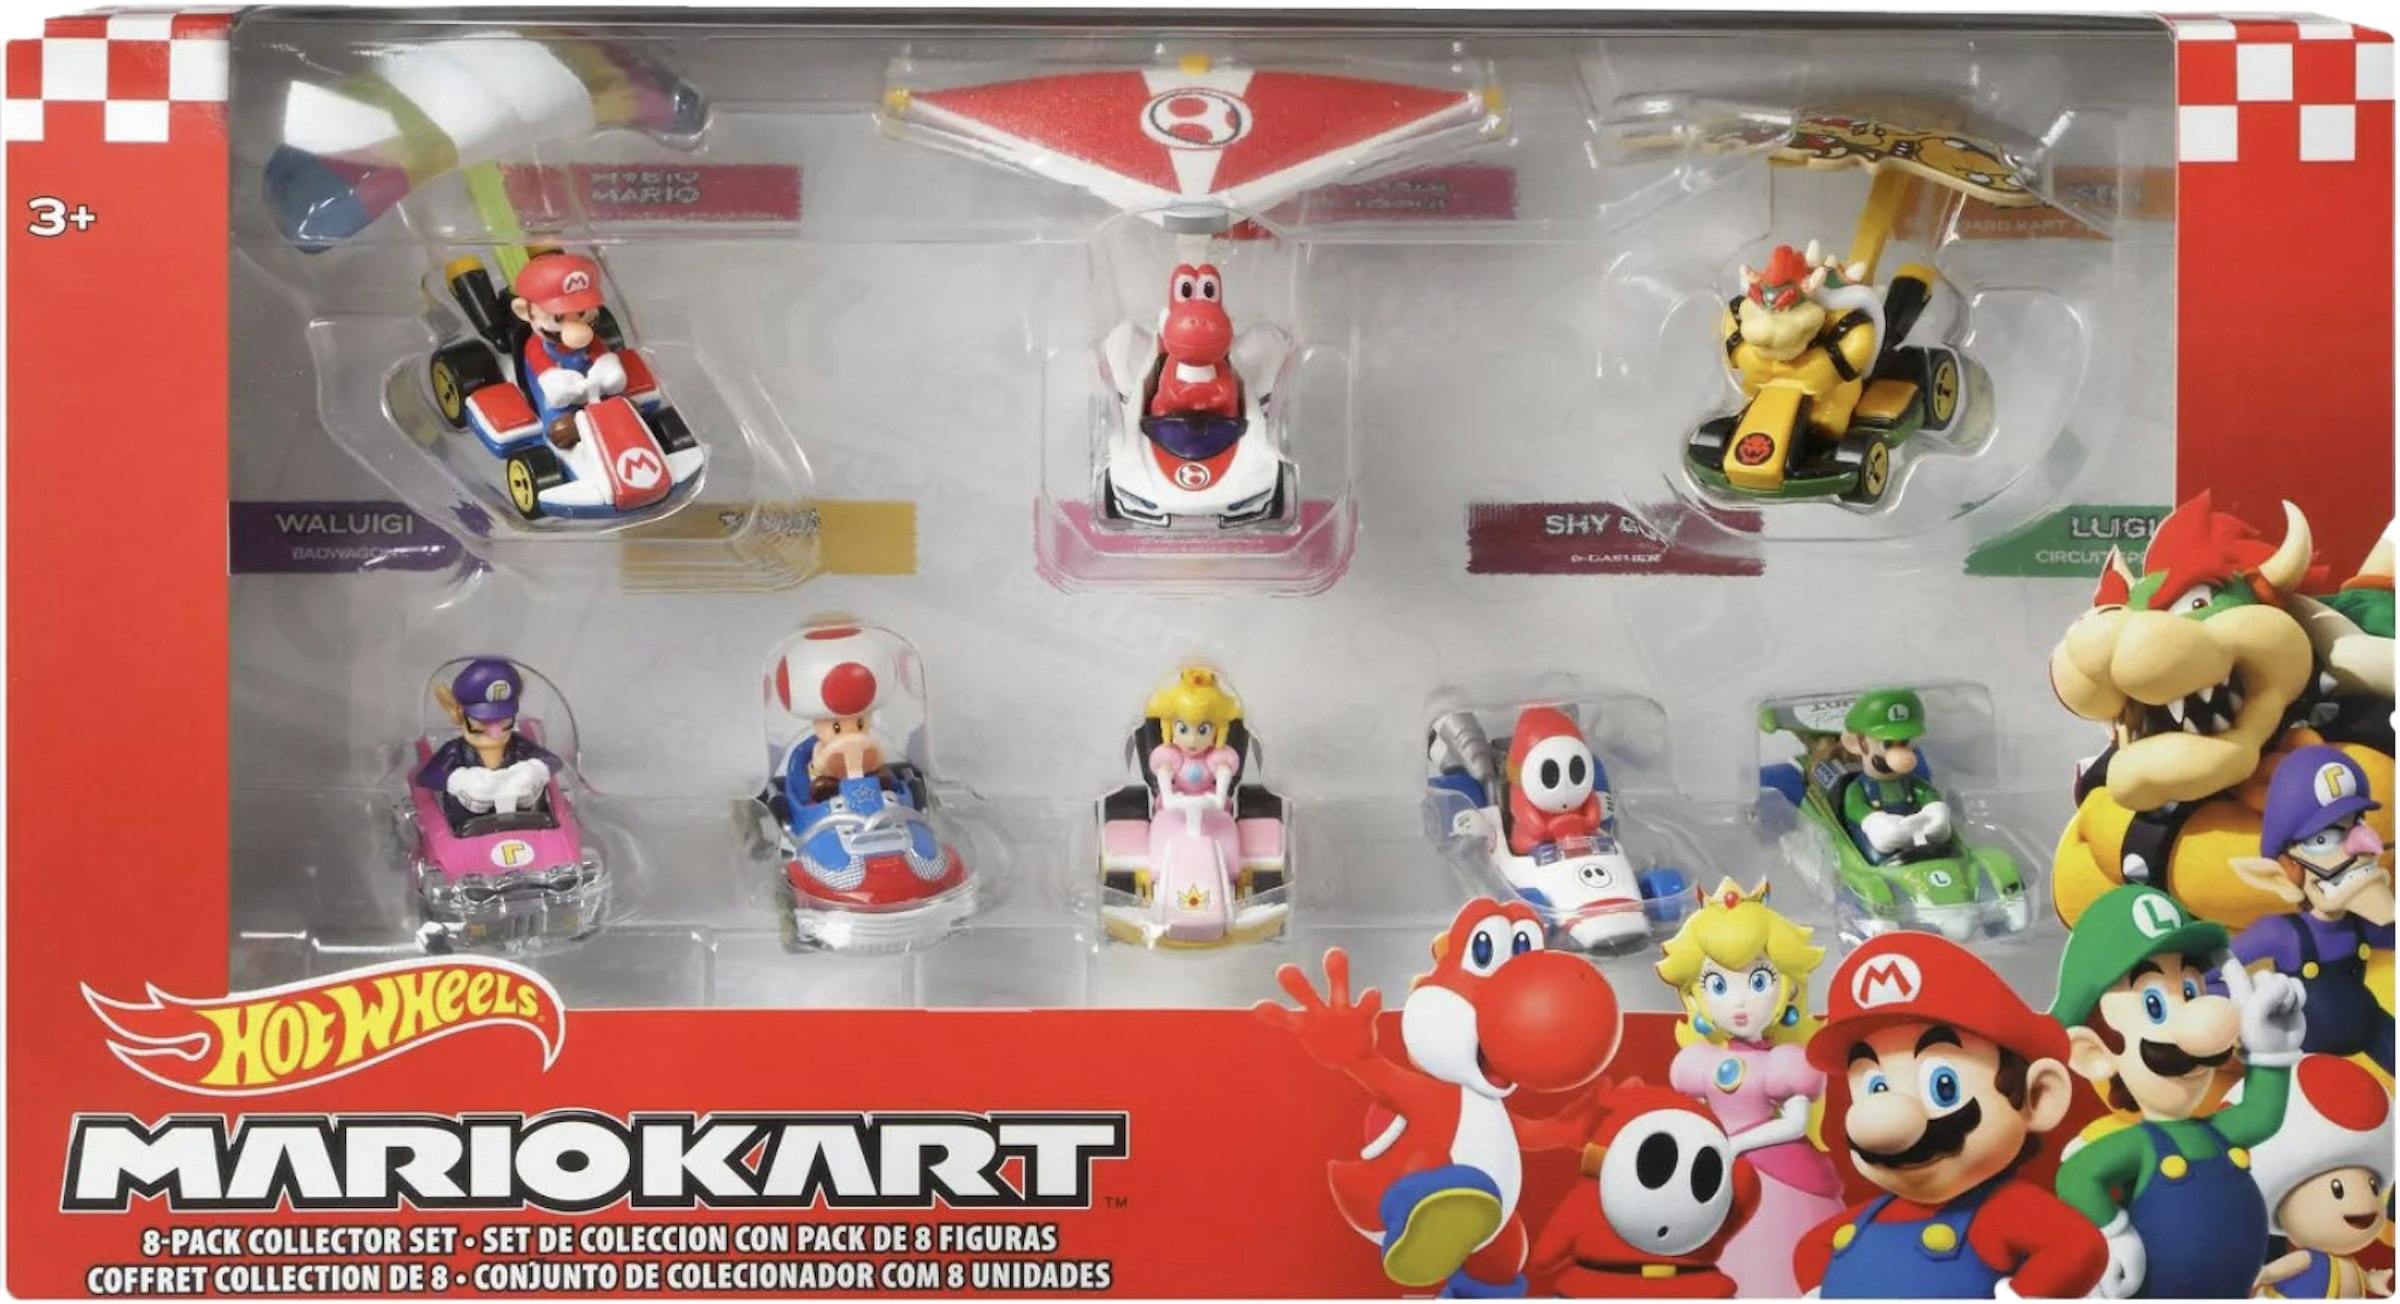 Wheels Mario Kart Collectors Set of 8 - US